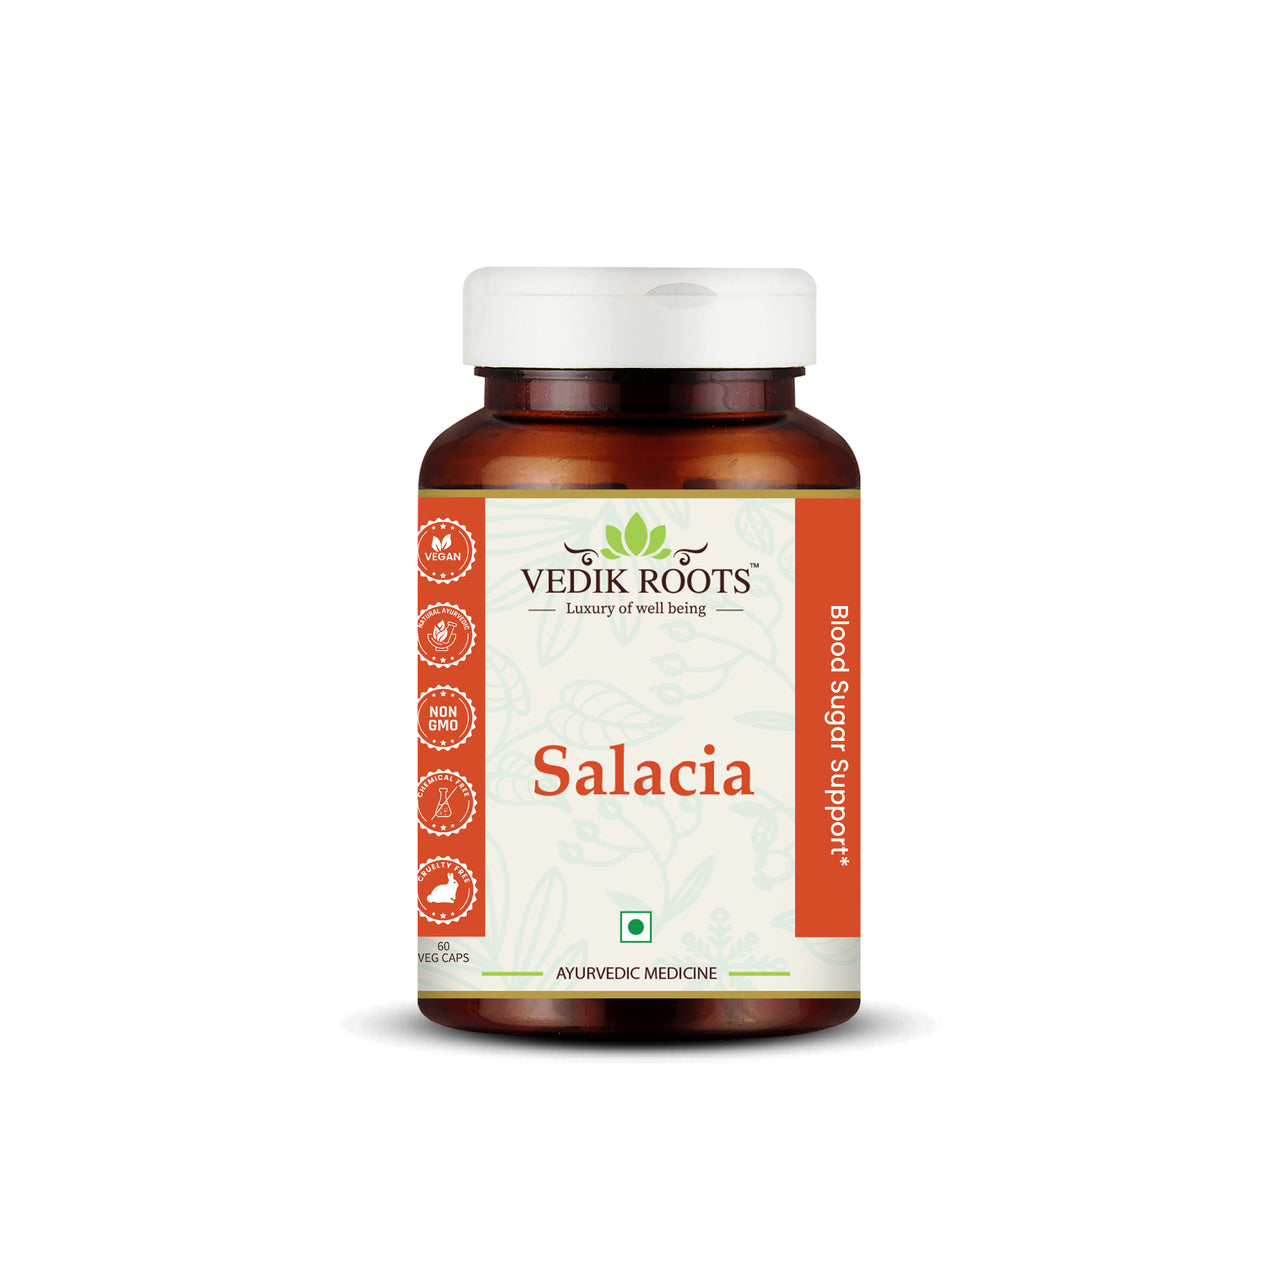 Salacia: Ayurvedic and Herbal Blood Sugar Management